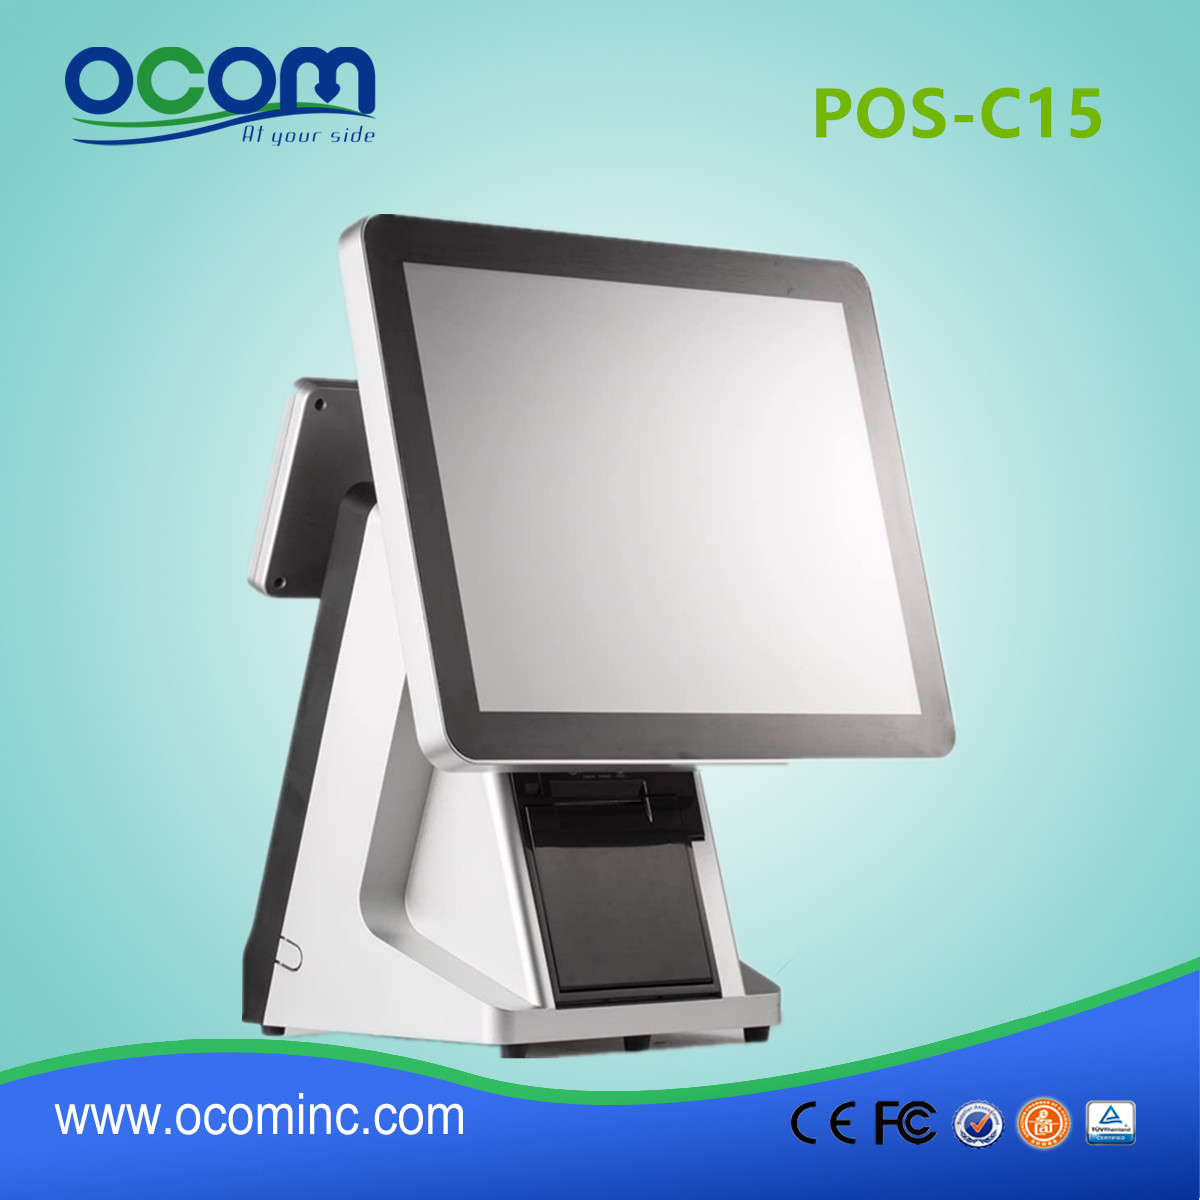 POS-C15-15 pollici touch screen macchina POS con stampante termica incorporata